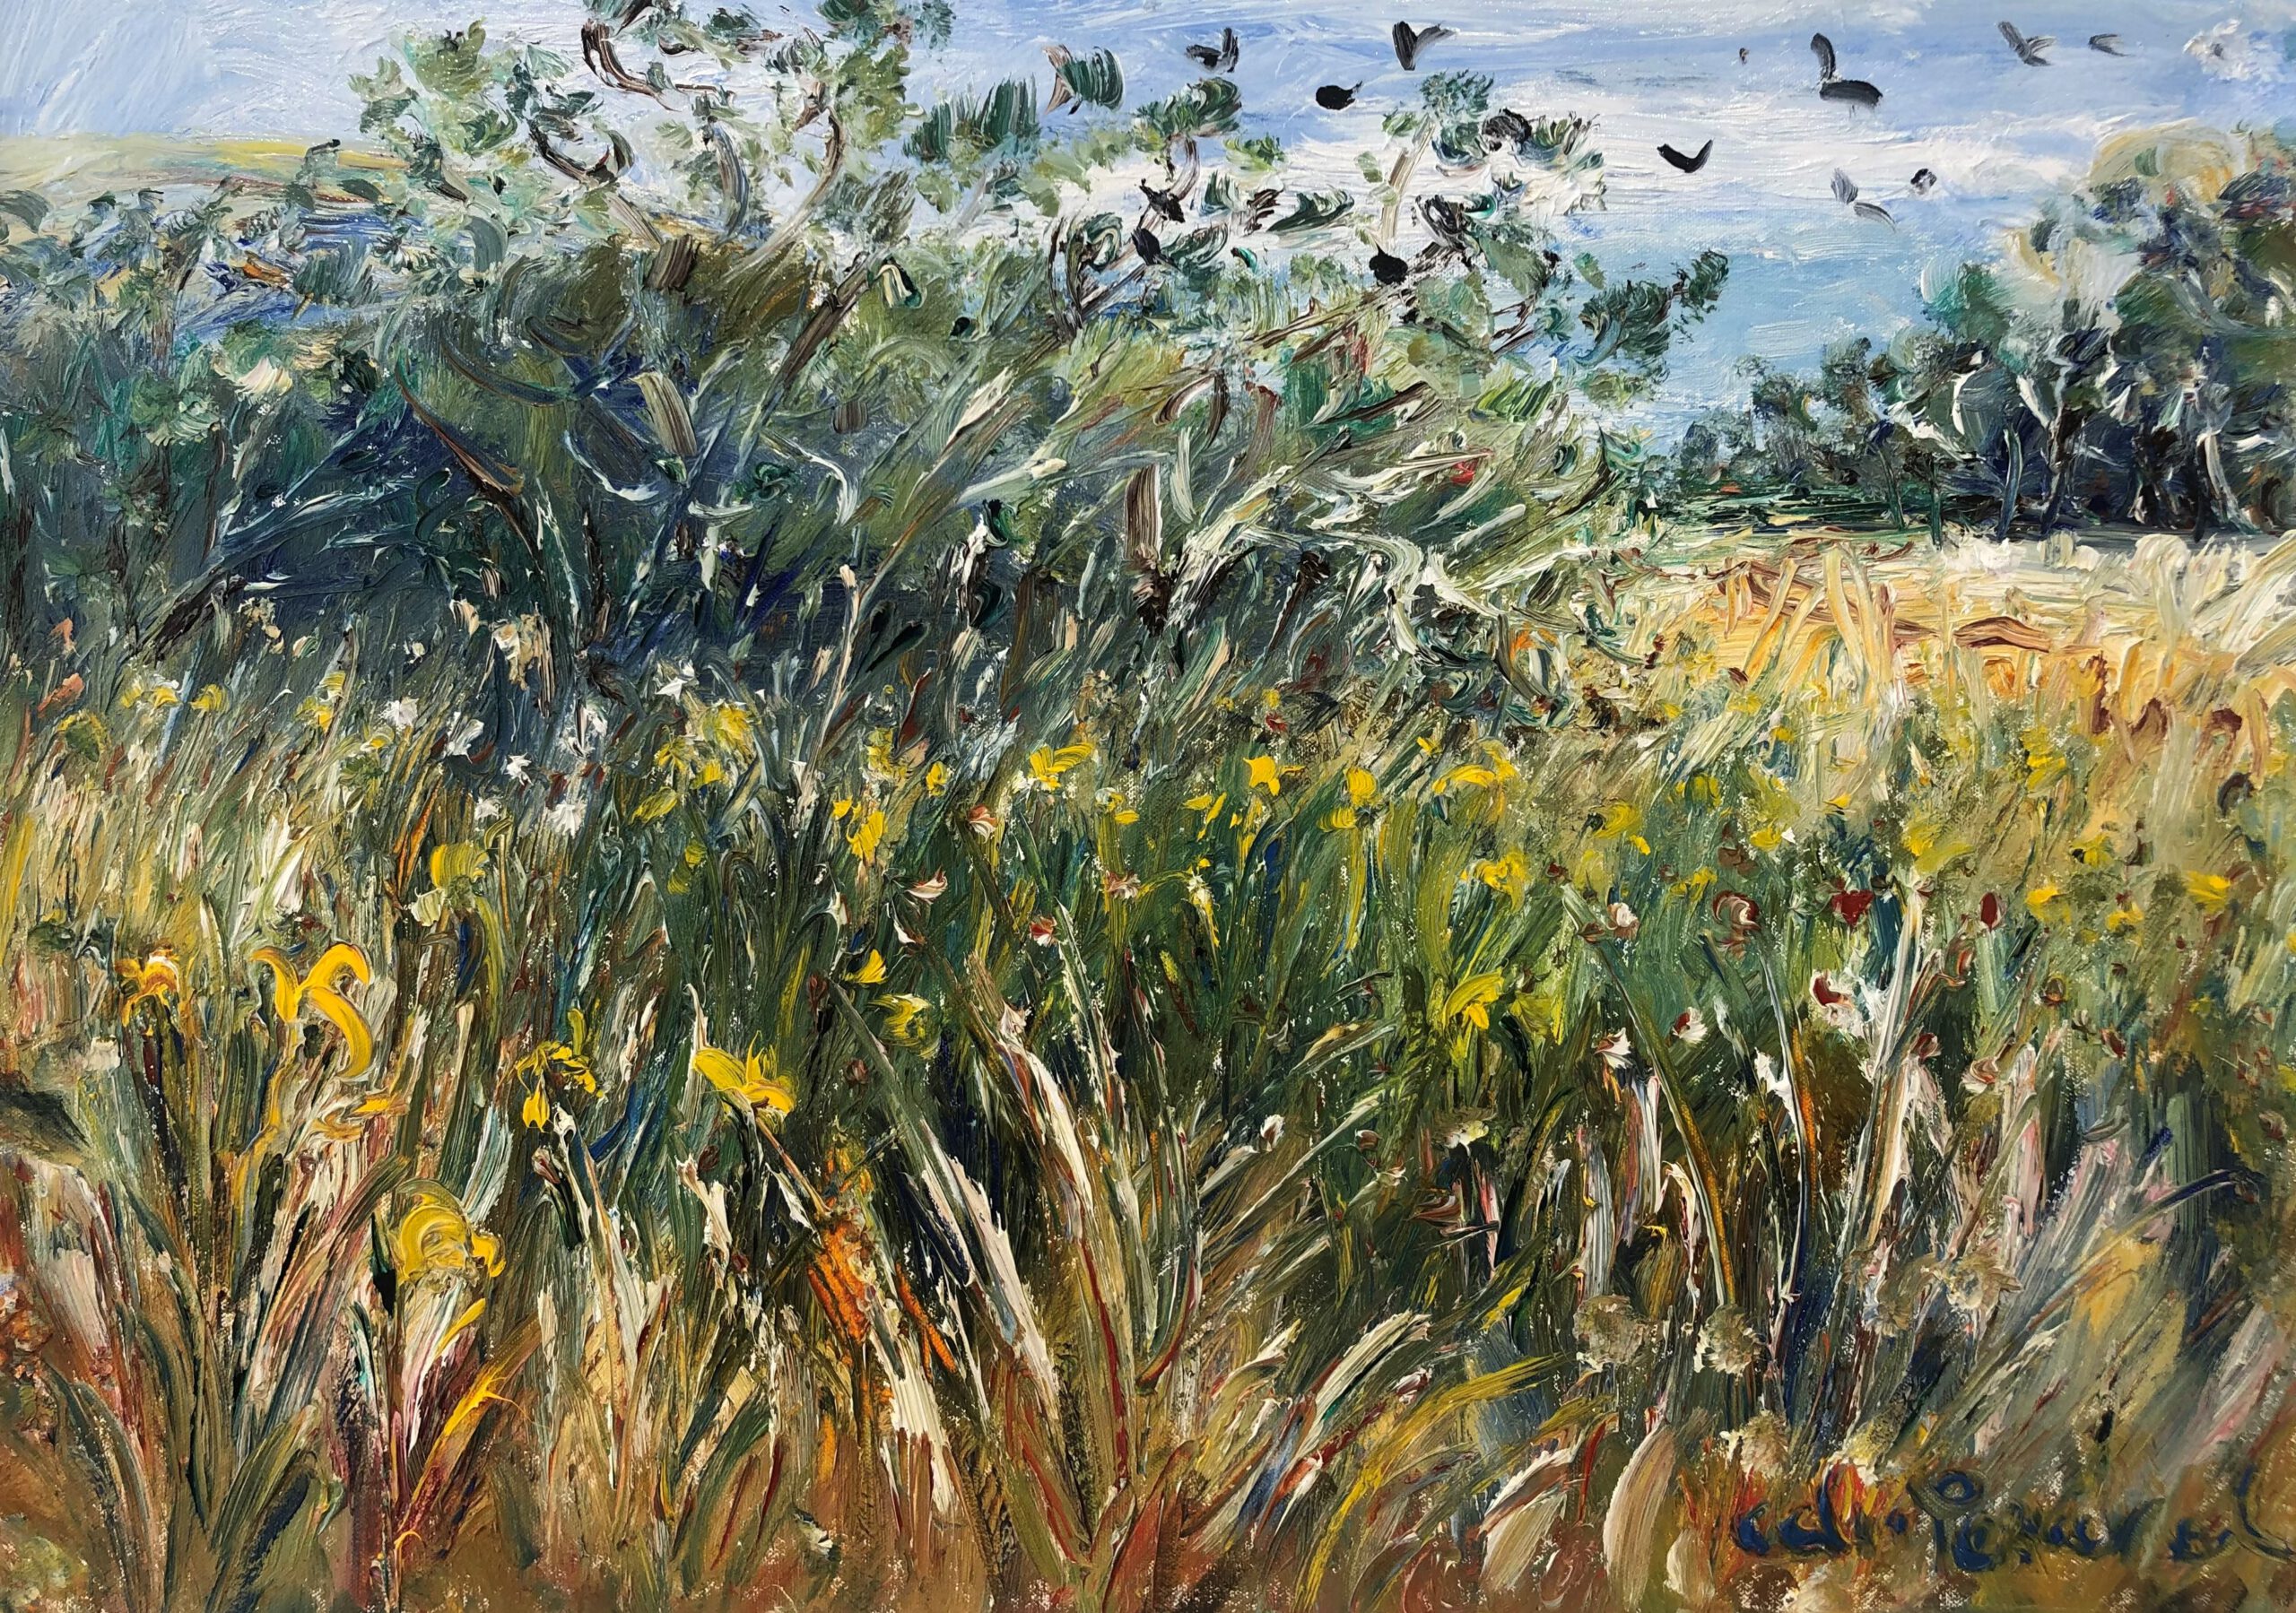 Celia Perceval 'Wild Iris in the Long Grass (West Coast, Ireland)' oil on canvas 70 x 50cm $9,500